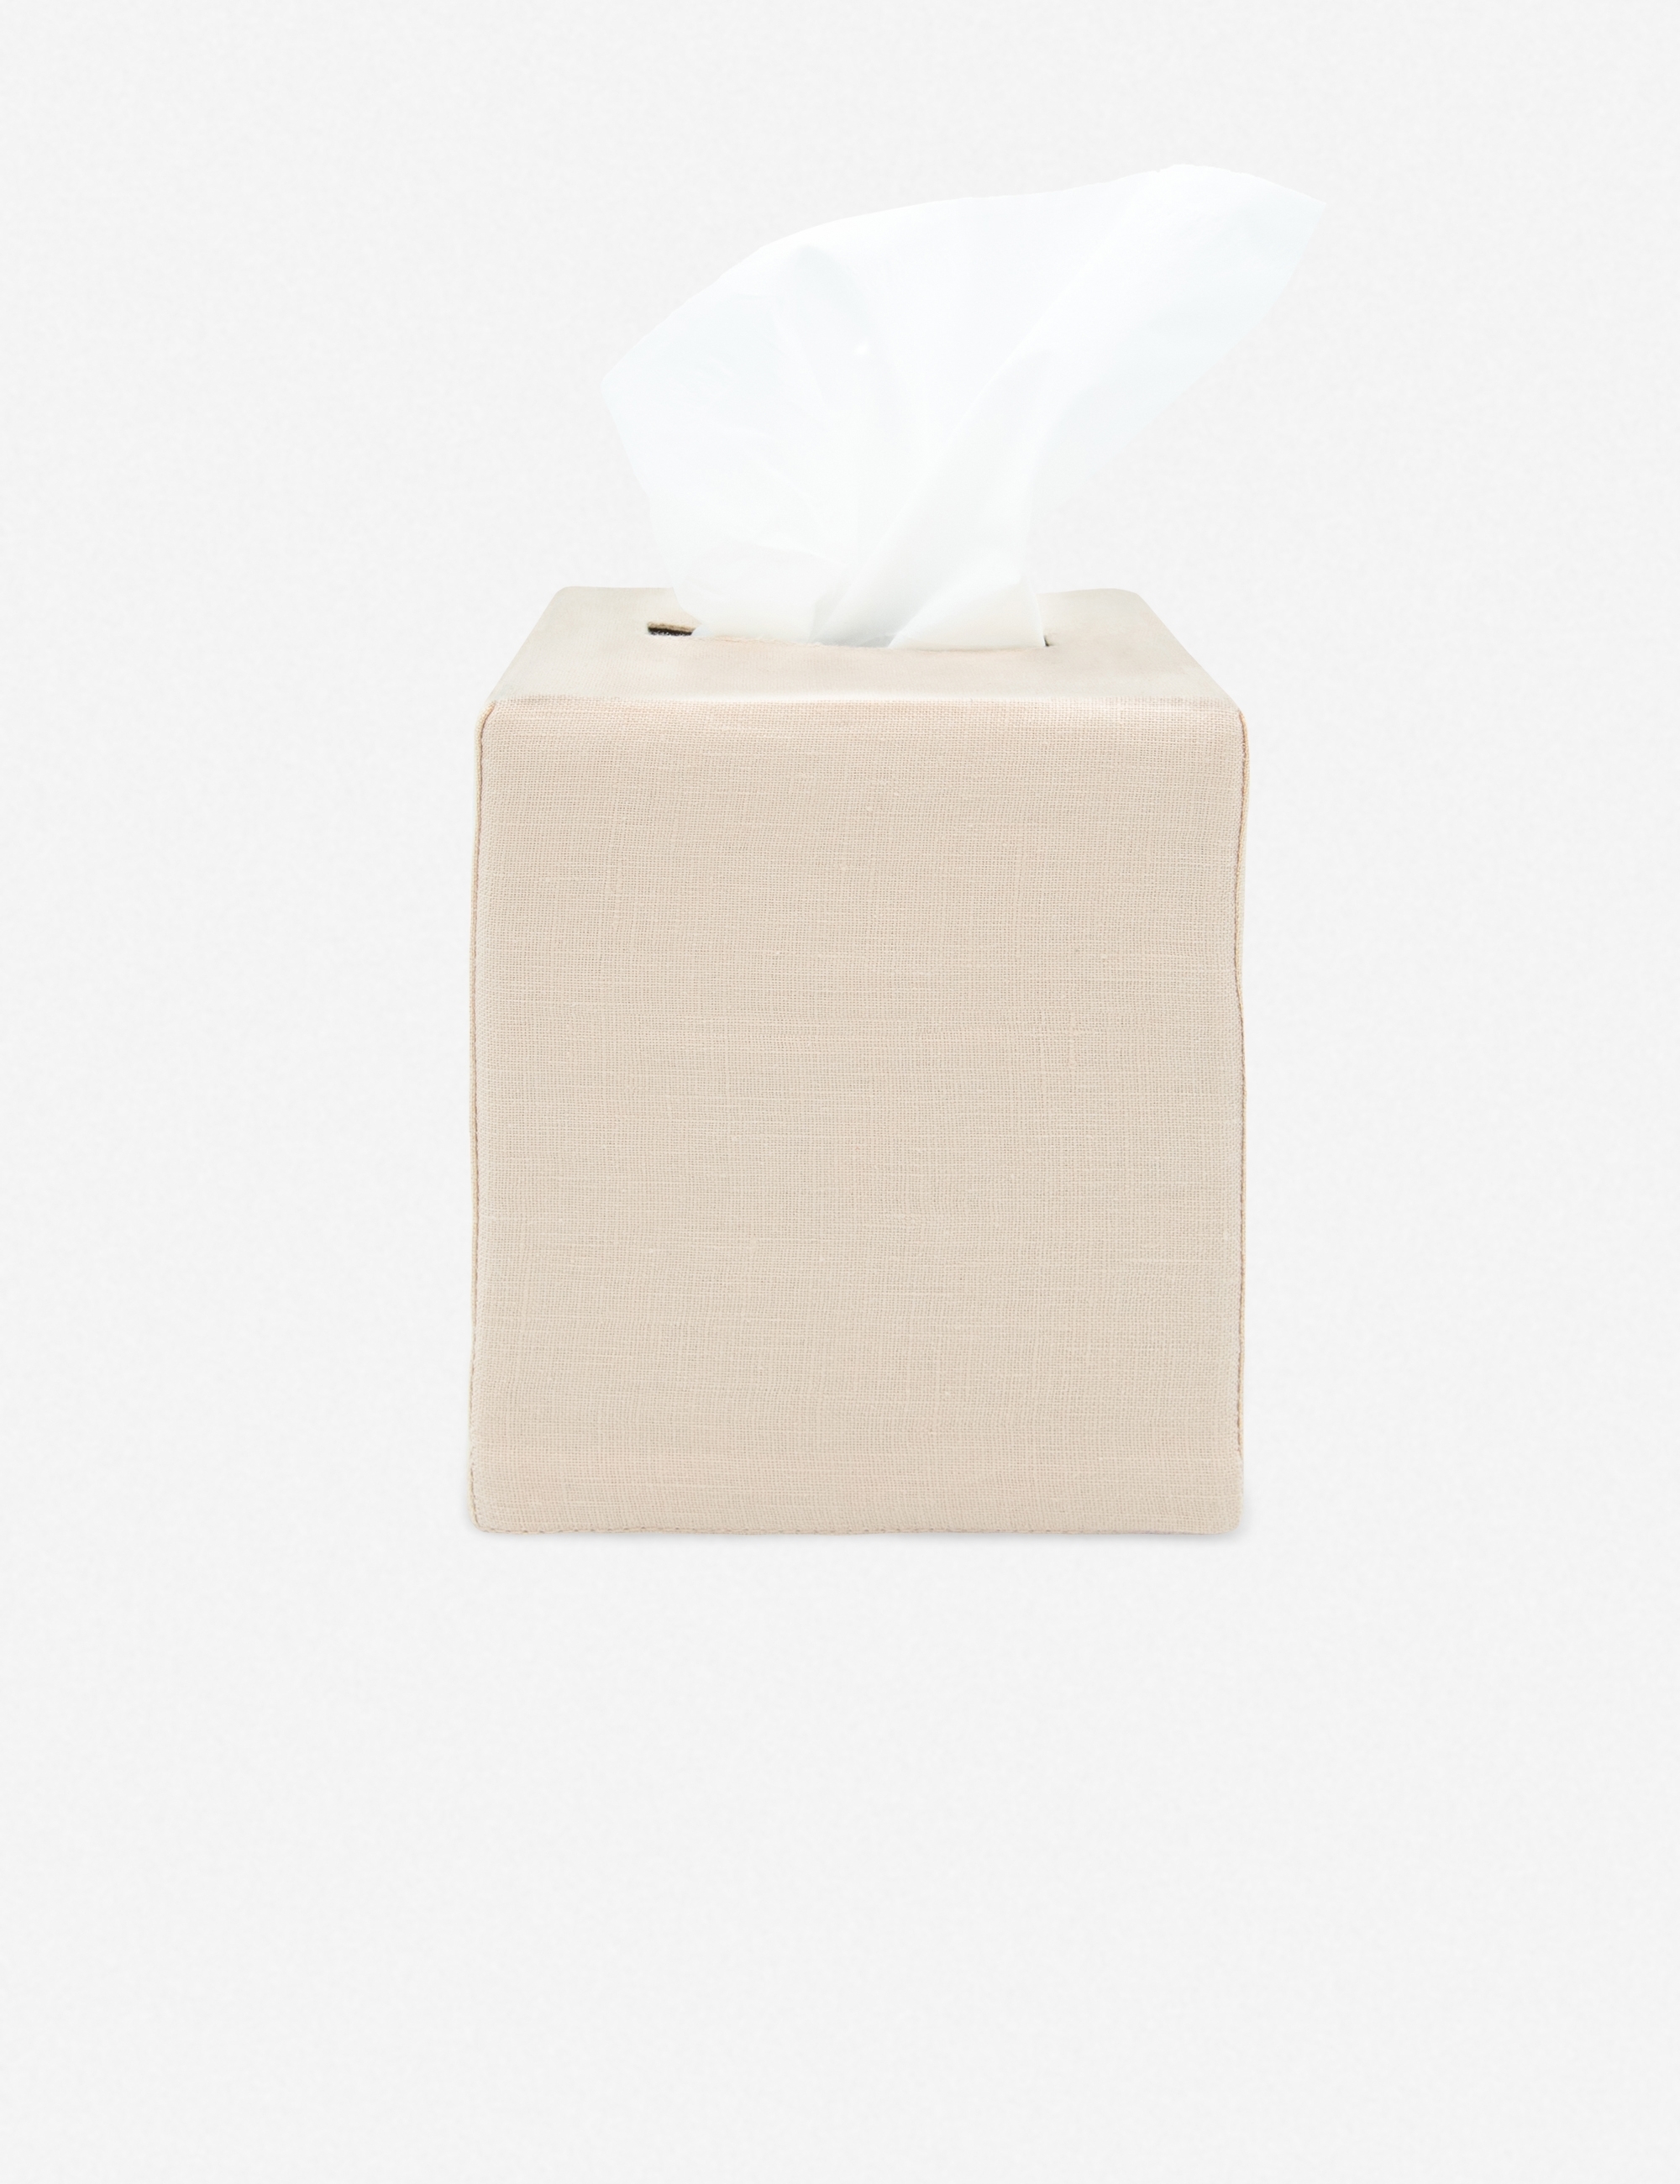 Tyla Tissue Box Cover, Oat Milk - Image 1